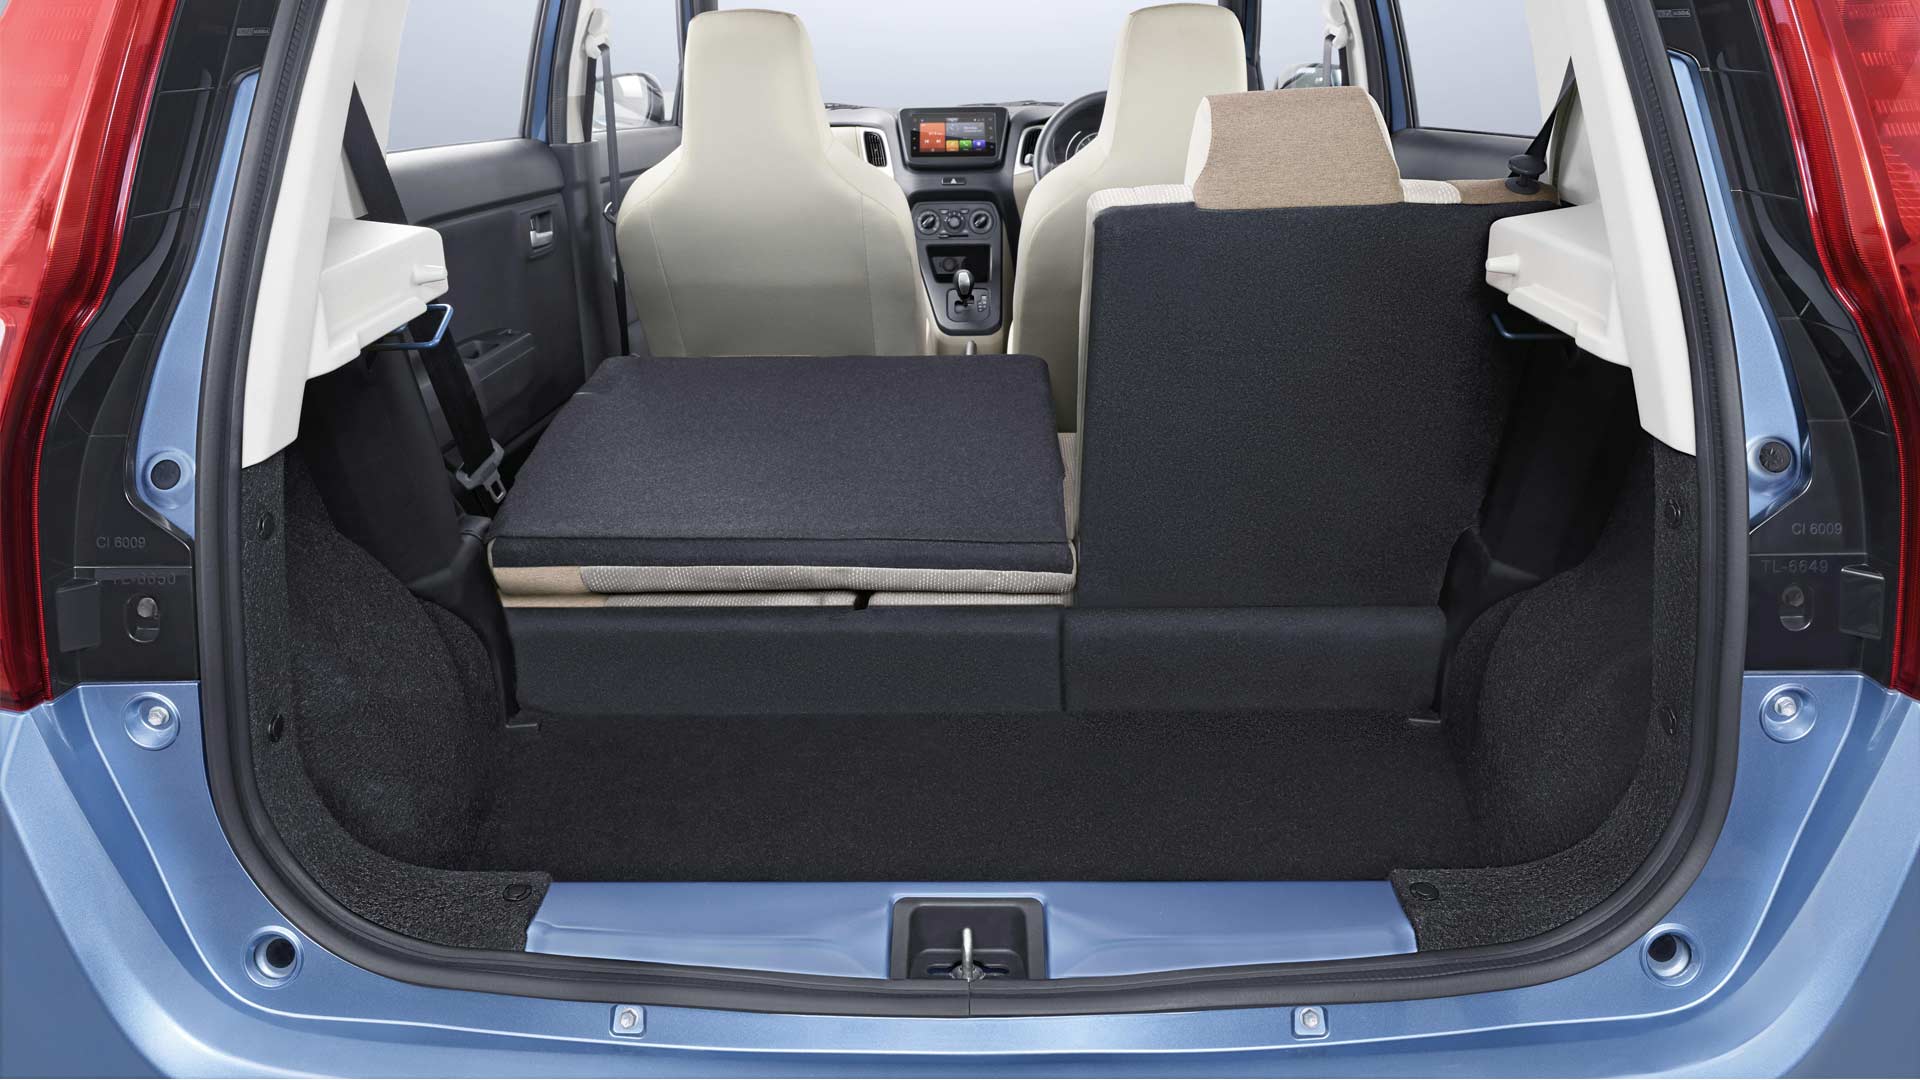 2019-Maruti-Suzuki-Wagon-R-Interior-boot_3